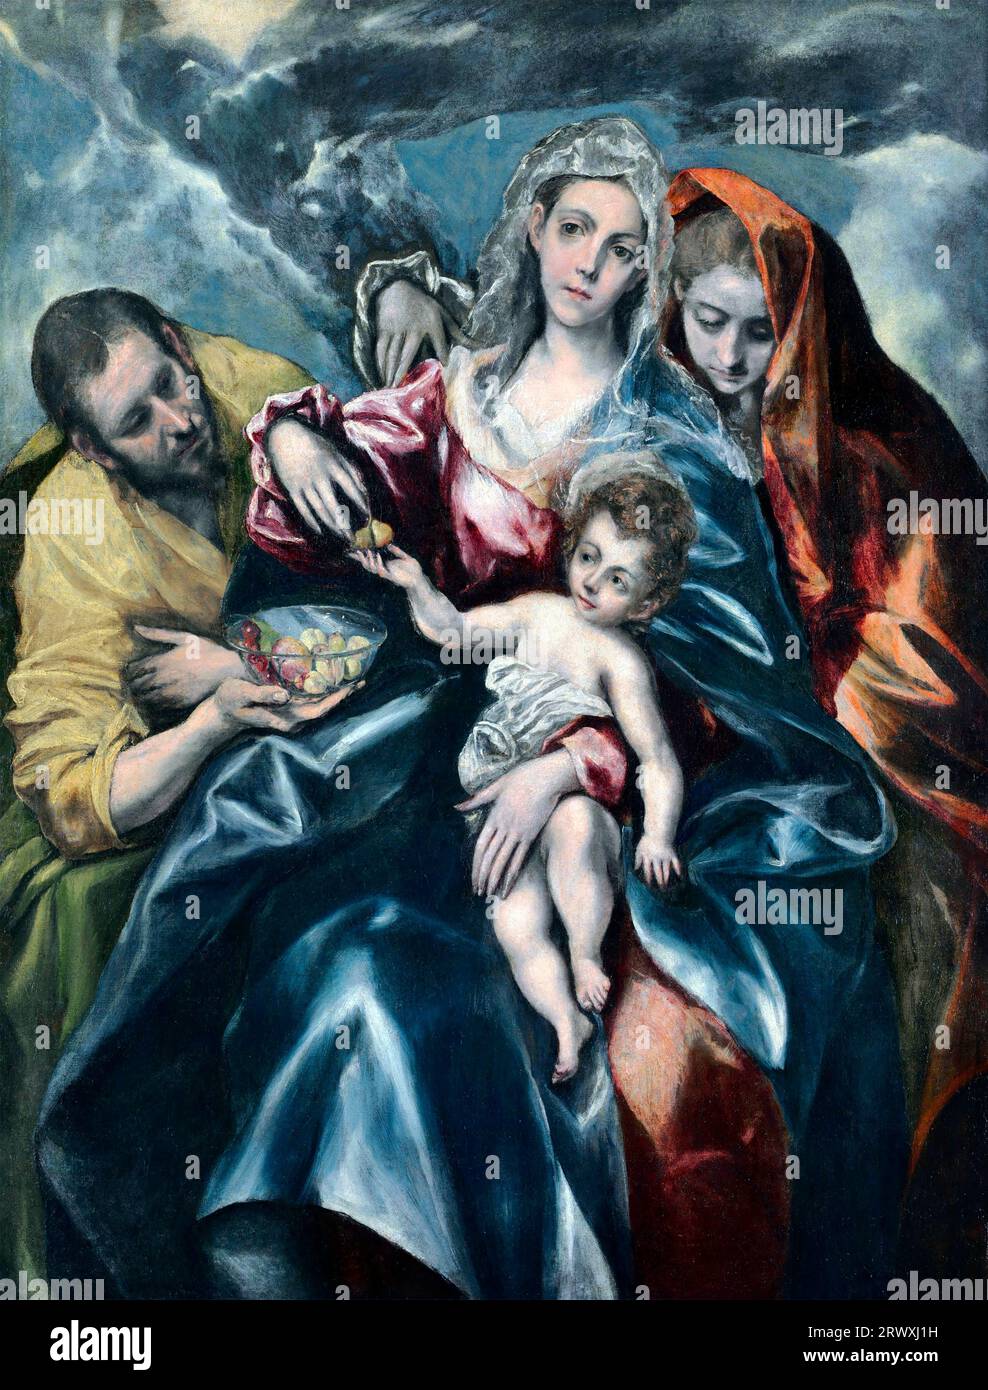 La Sacra famiglia con Maria Maddalena di El Greco (Domenikos Theotokopoulos, 1541-1614), olio su tela, c. 1590-95 Foto Stock